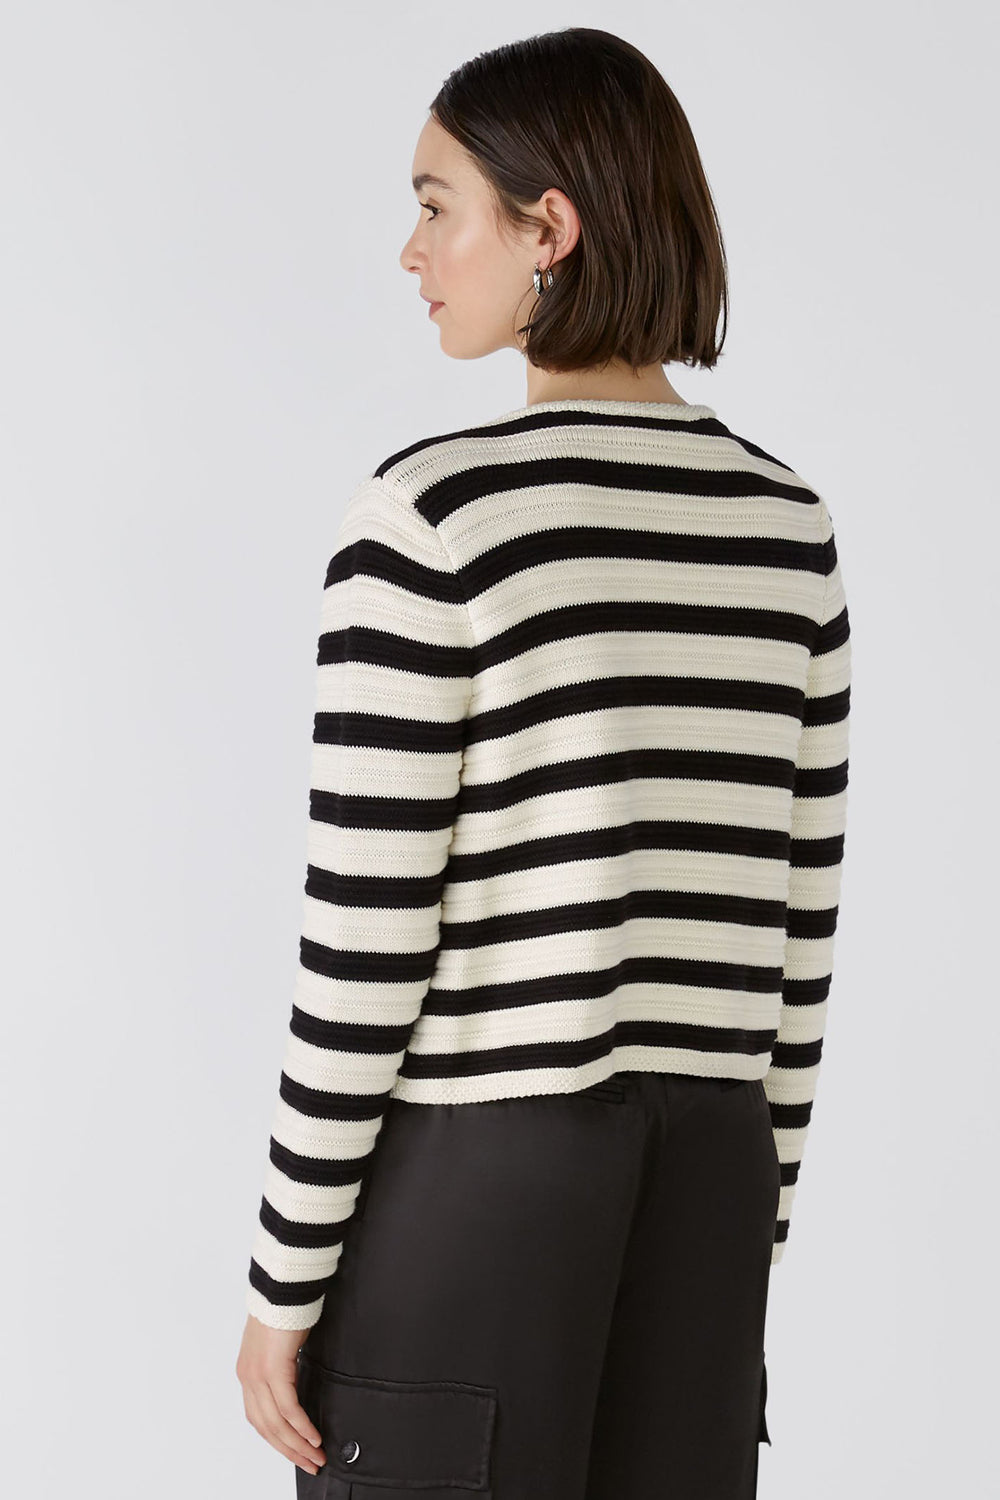 Oui 88263 Off White Black Striped Button Front Cardigan - Olivia Grace Fashion